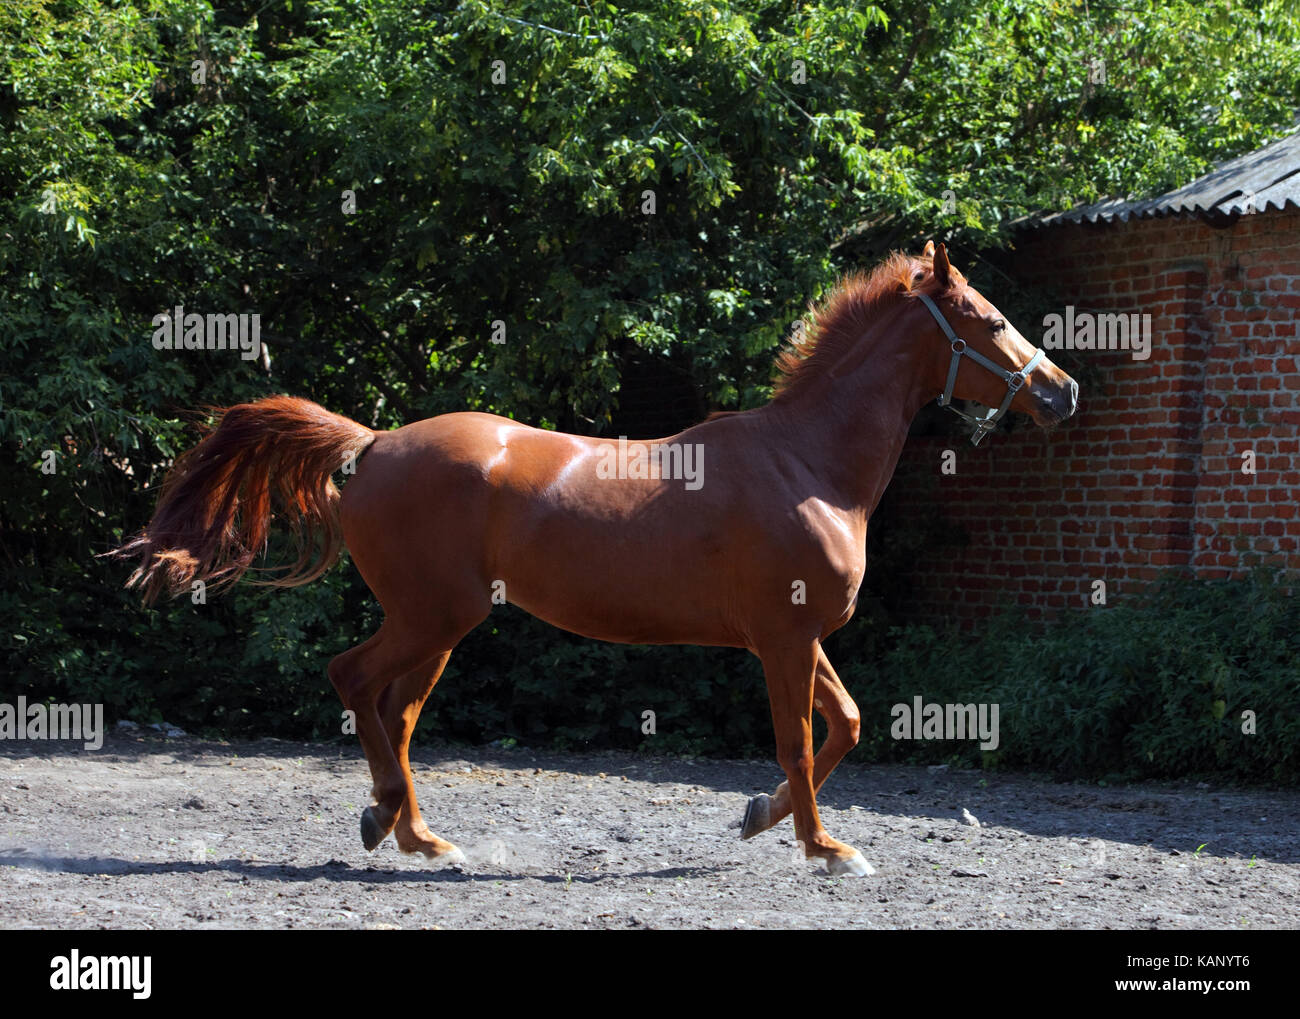 Portrait of race horse animal in rural farming landscape Stock Photo